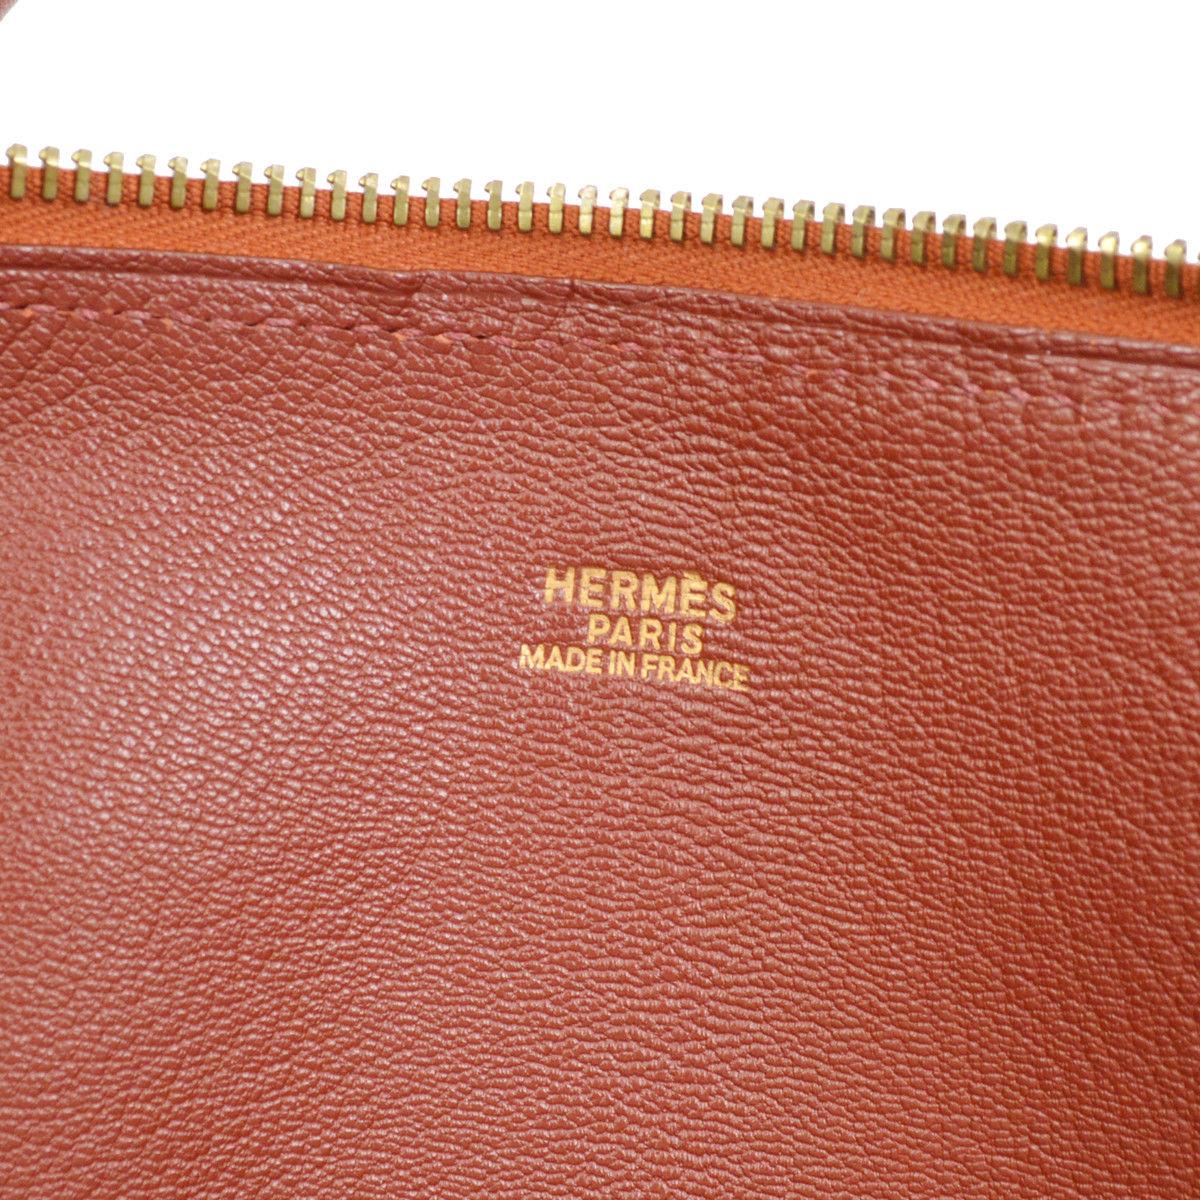 Women's or Men's Hermes Leather Top Handle Large Men's Women's Weekender Carryall Travel Bag